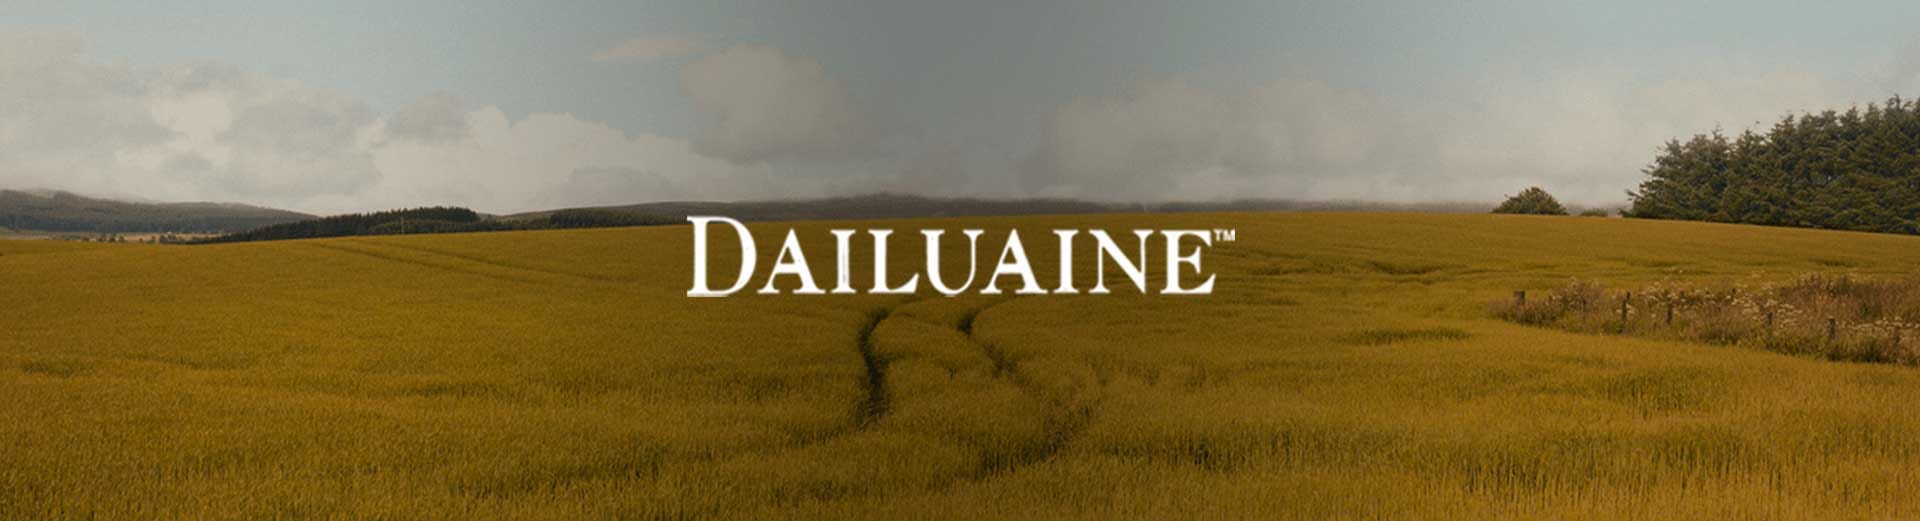 Dailuaine Distillery